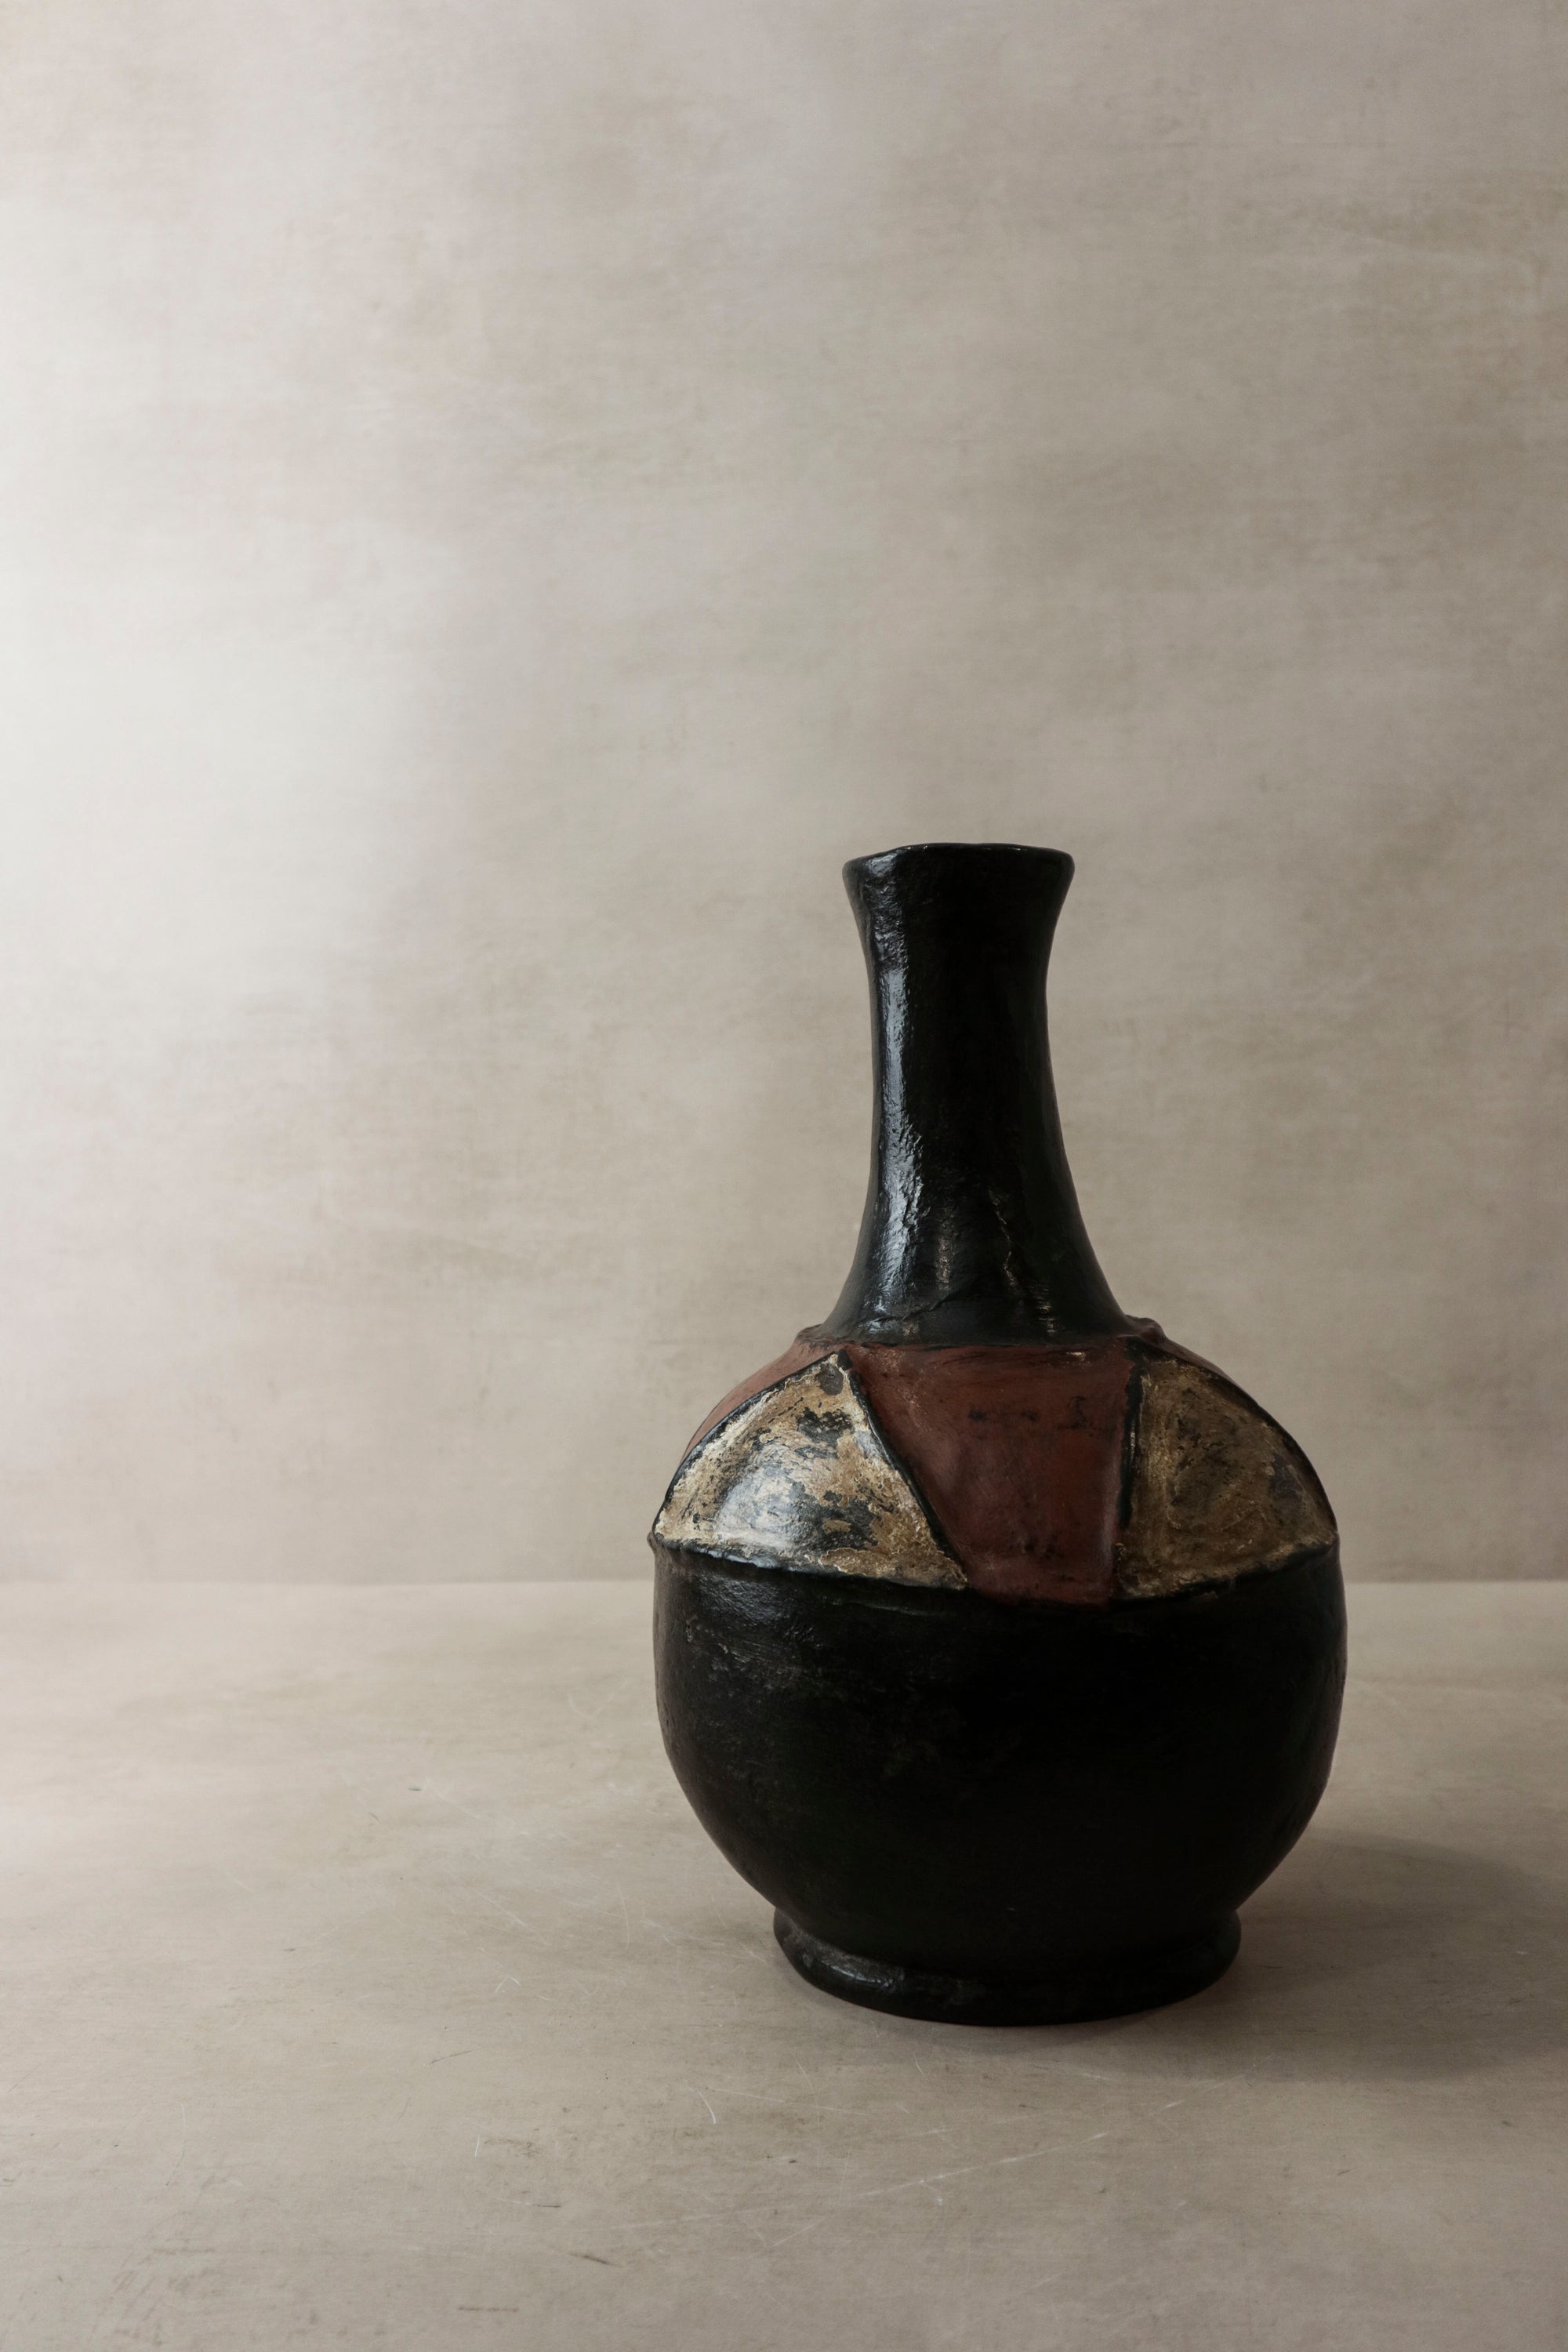 Mangbetu Clay Vase, Tanzania - 41.2